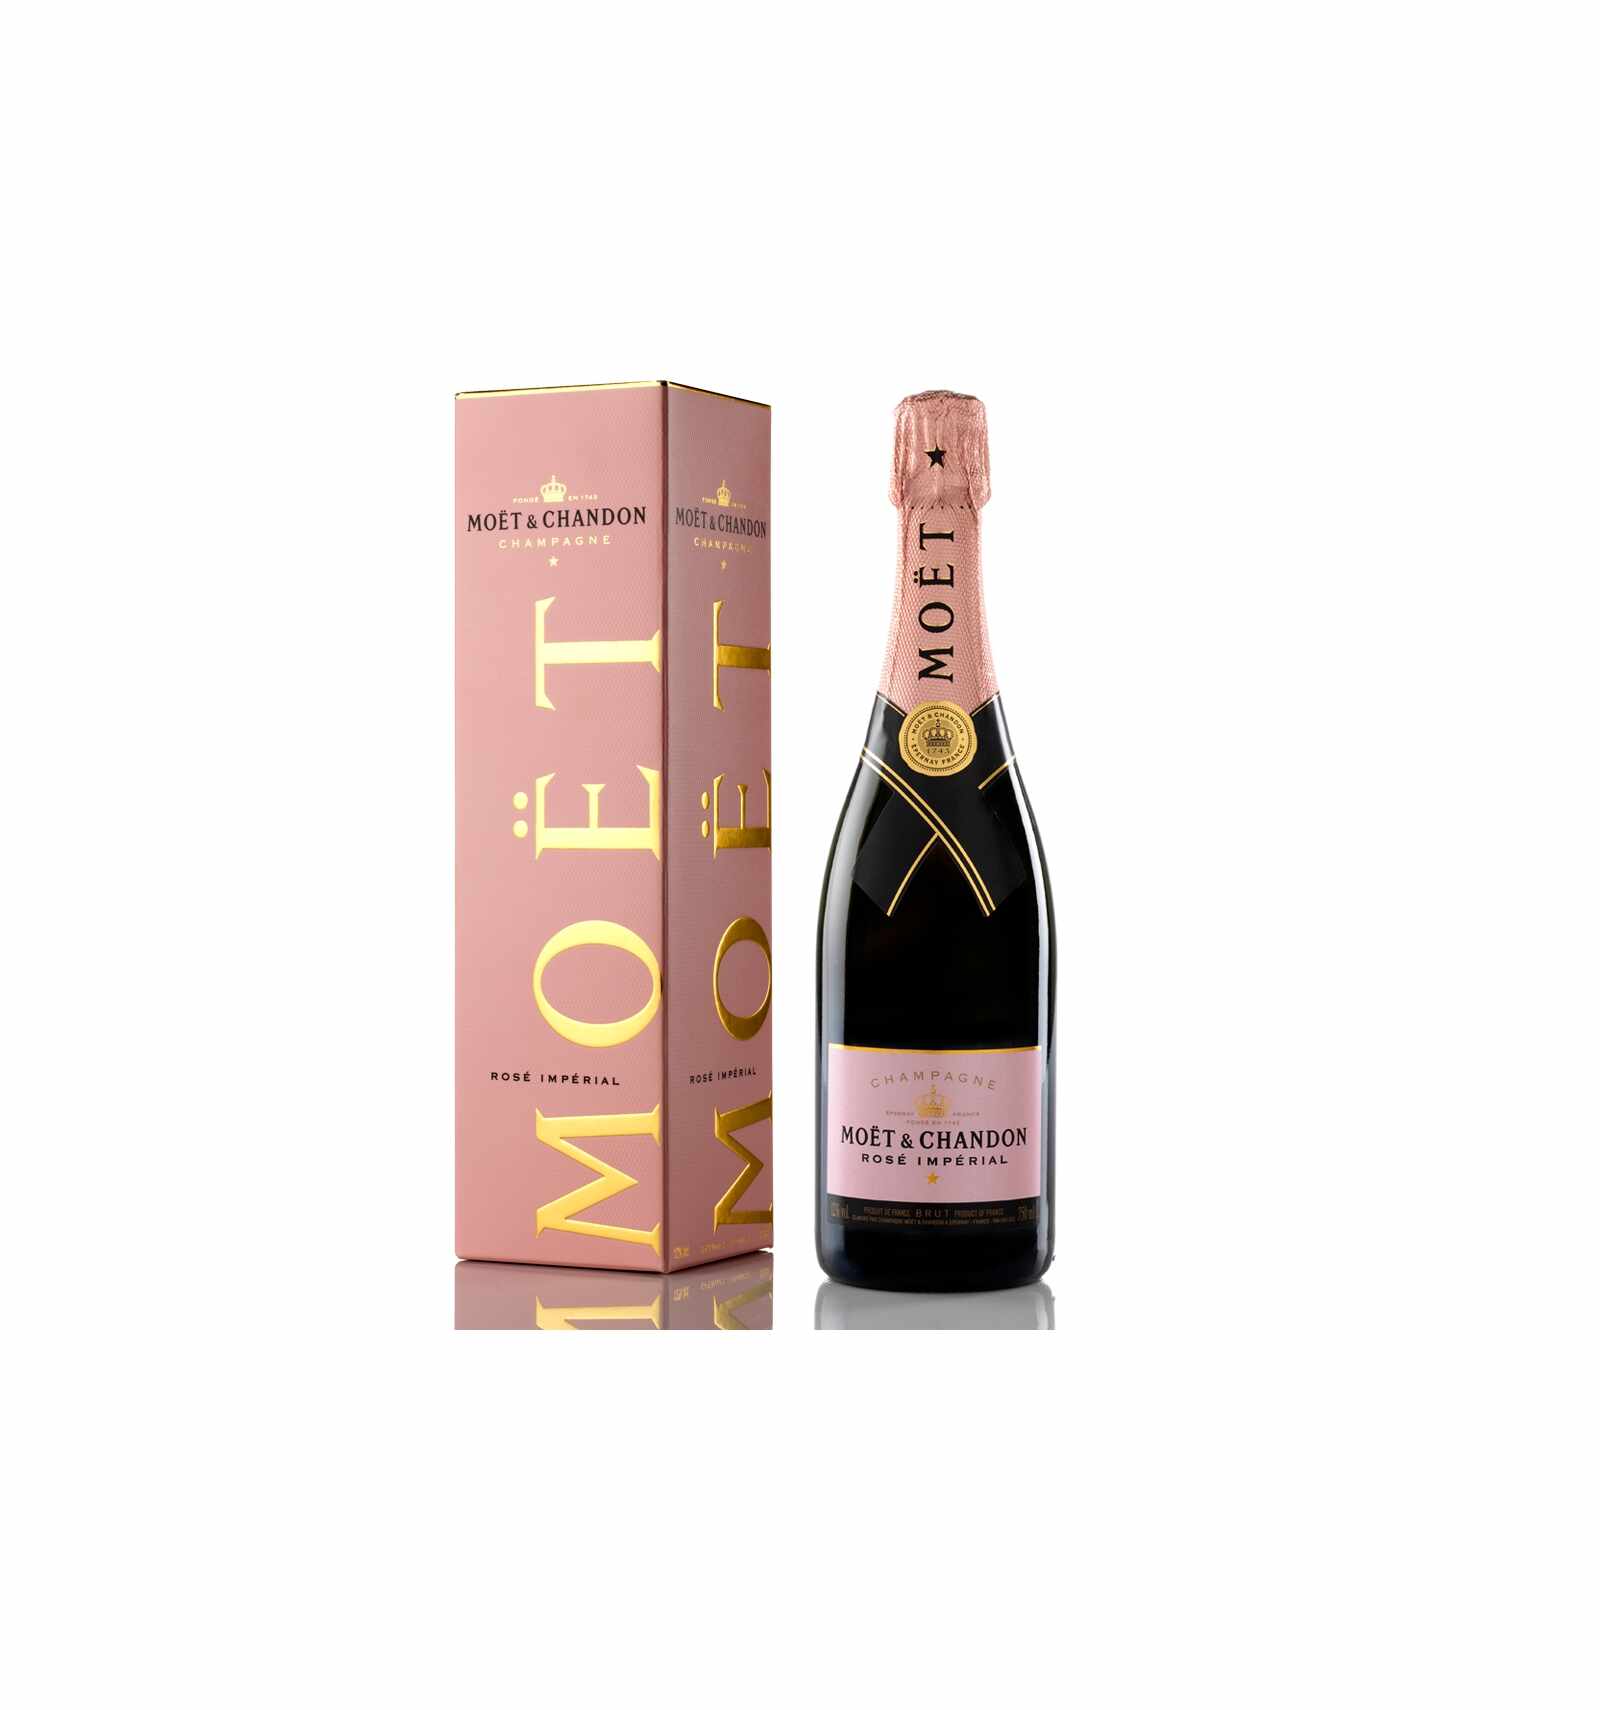 Sampanie roze, MoÃ«t & Chandon RosÃ© Imperial Champagne, 0.75L, 12% alc., Franta